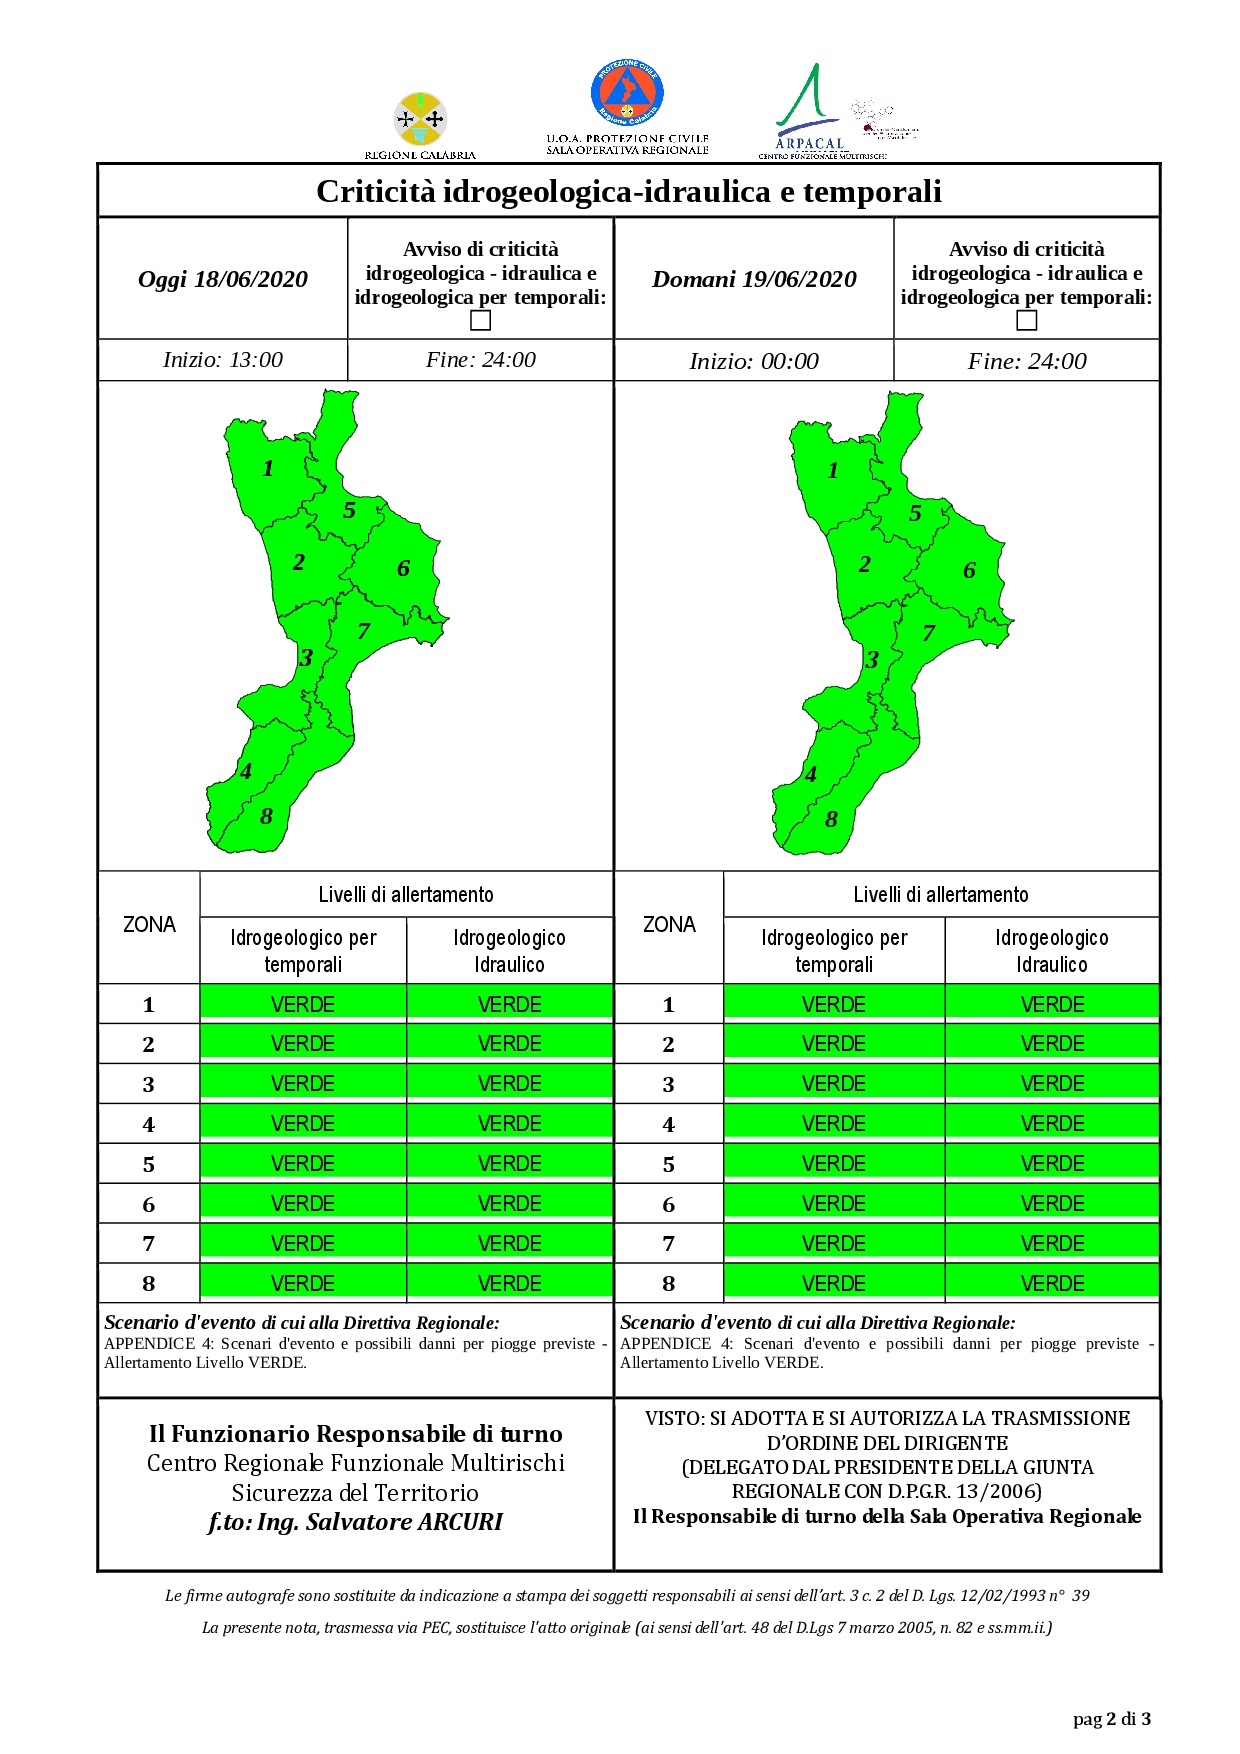 Criticità idrogeologica-idraulica e temporali in Calabria 18-06-2020